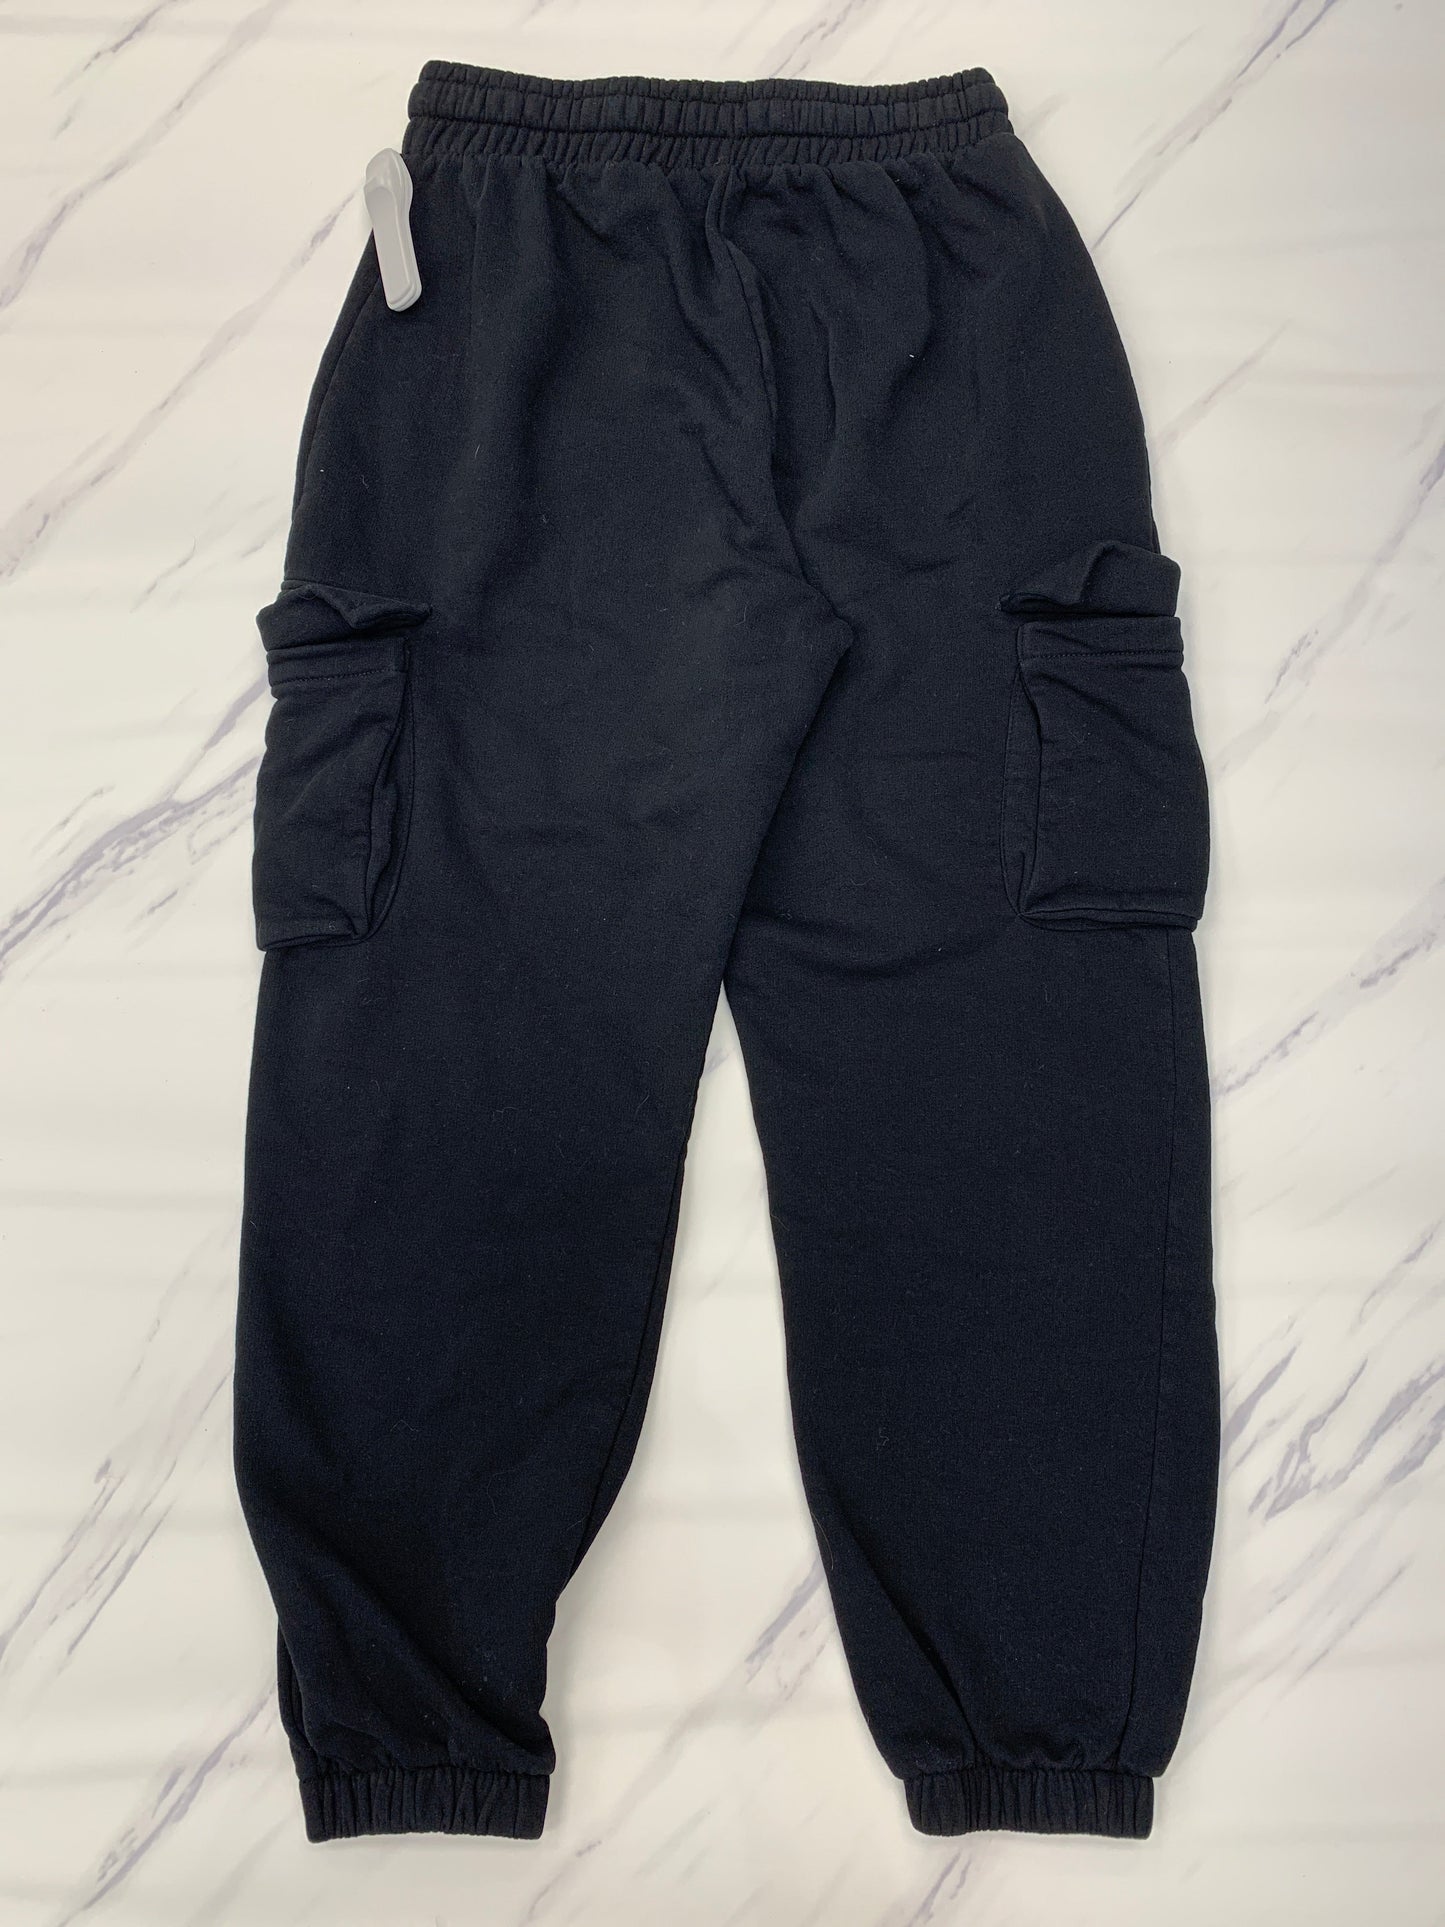 Black Pants Cargo & Utility Zara, Size M